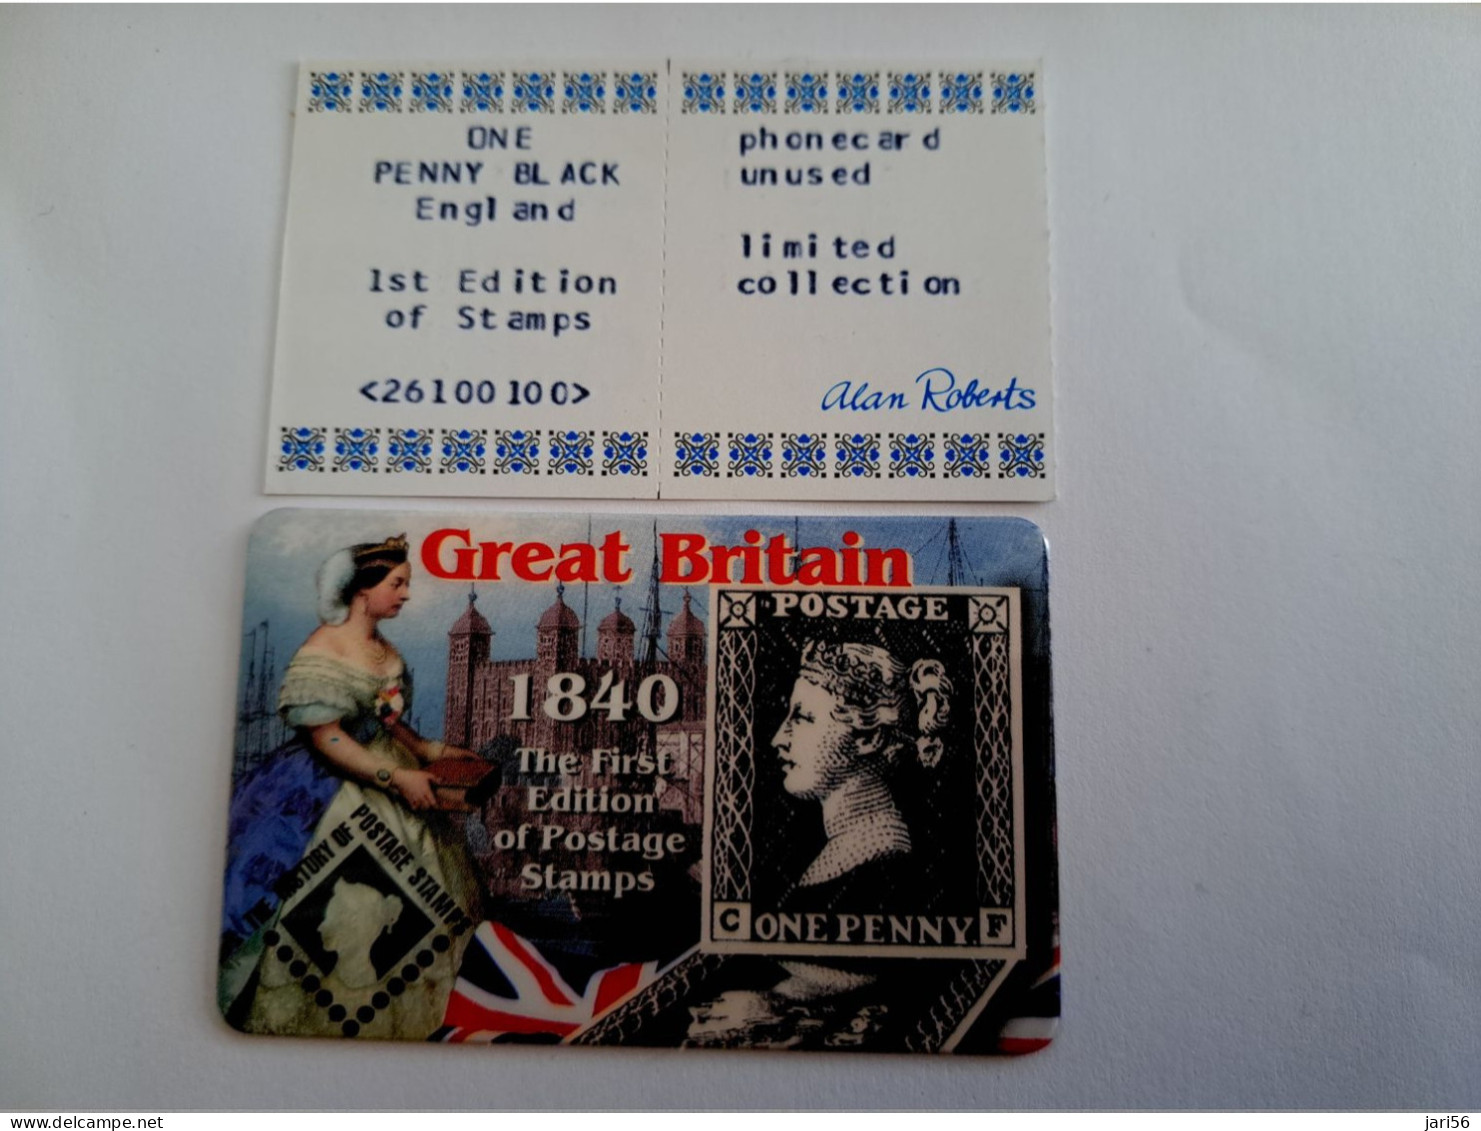 GREAT BRITAIN /20 UNITS / PENNY BLACK  1840 / DATE 06/2002     /    PREPAID CARD / LIMITED EDITION/ MINT  **15703** - Collezioni